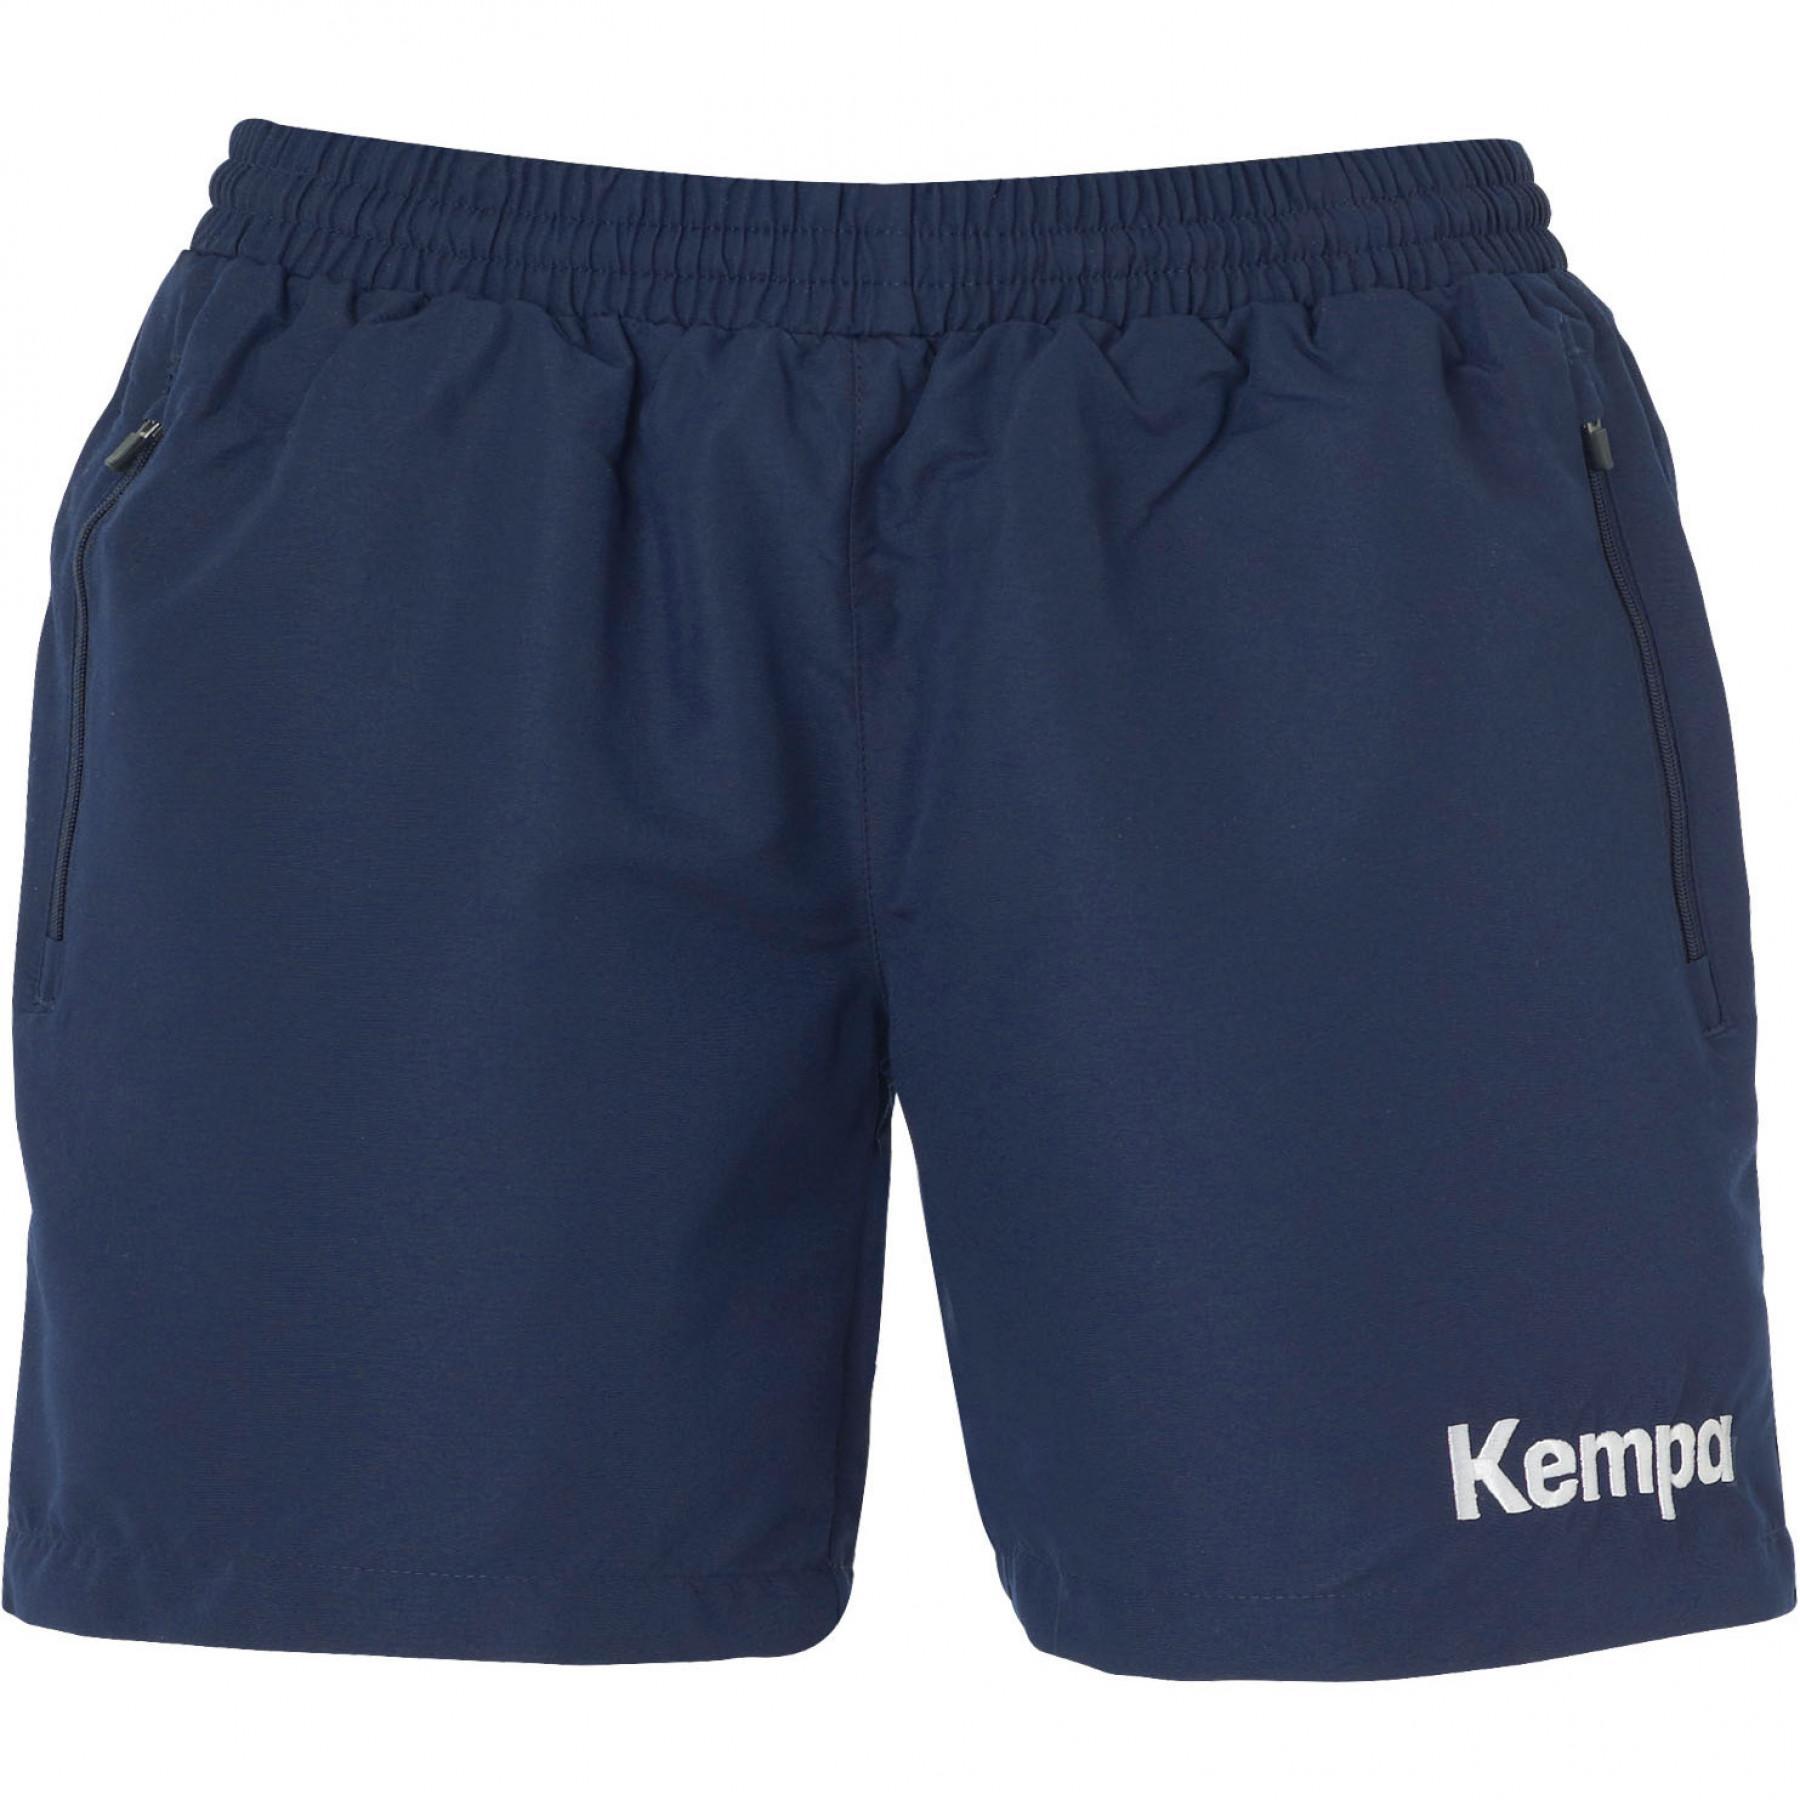 Damen-Shorts Kempa Woven